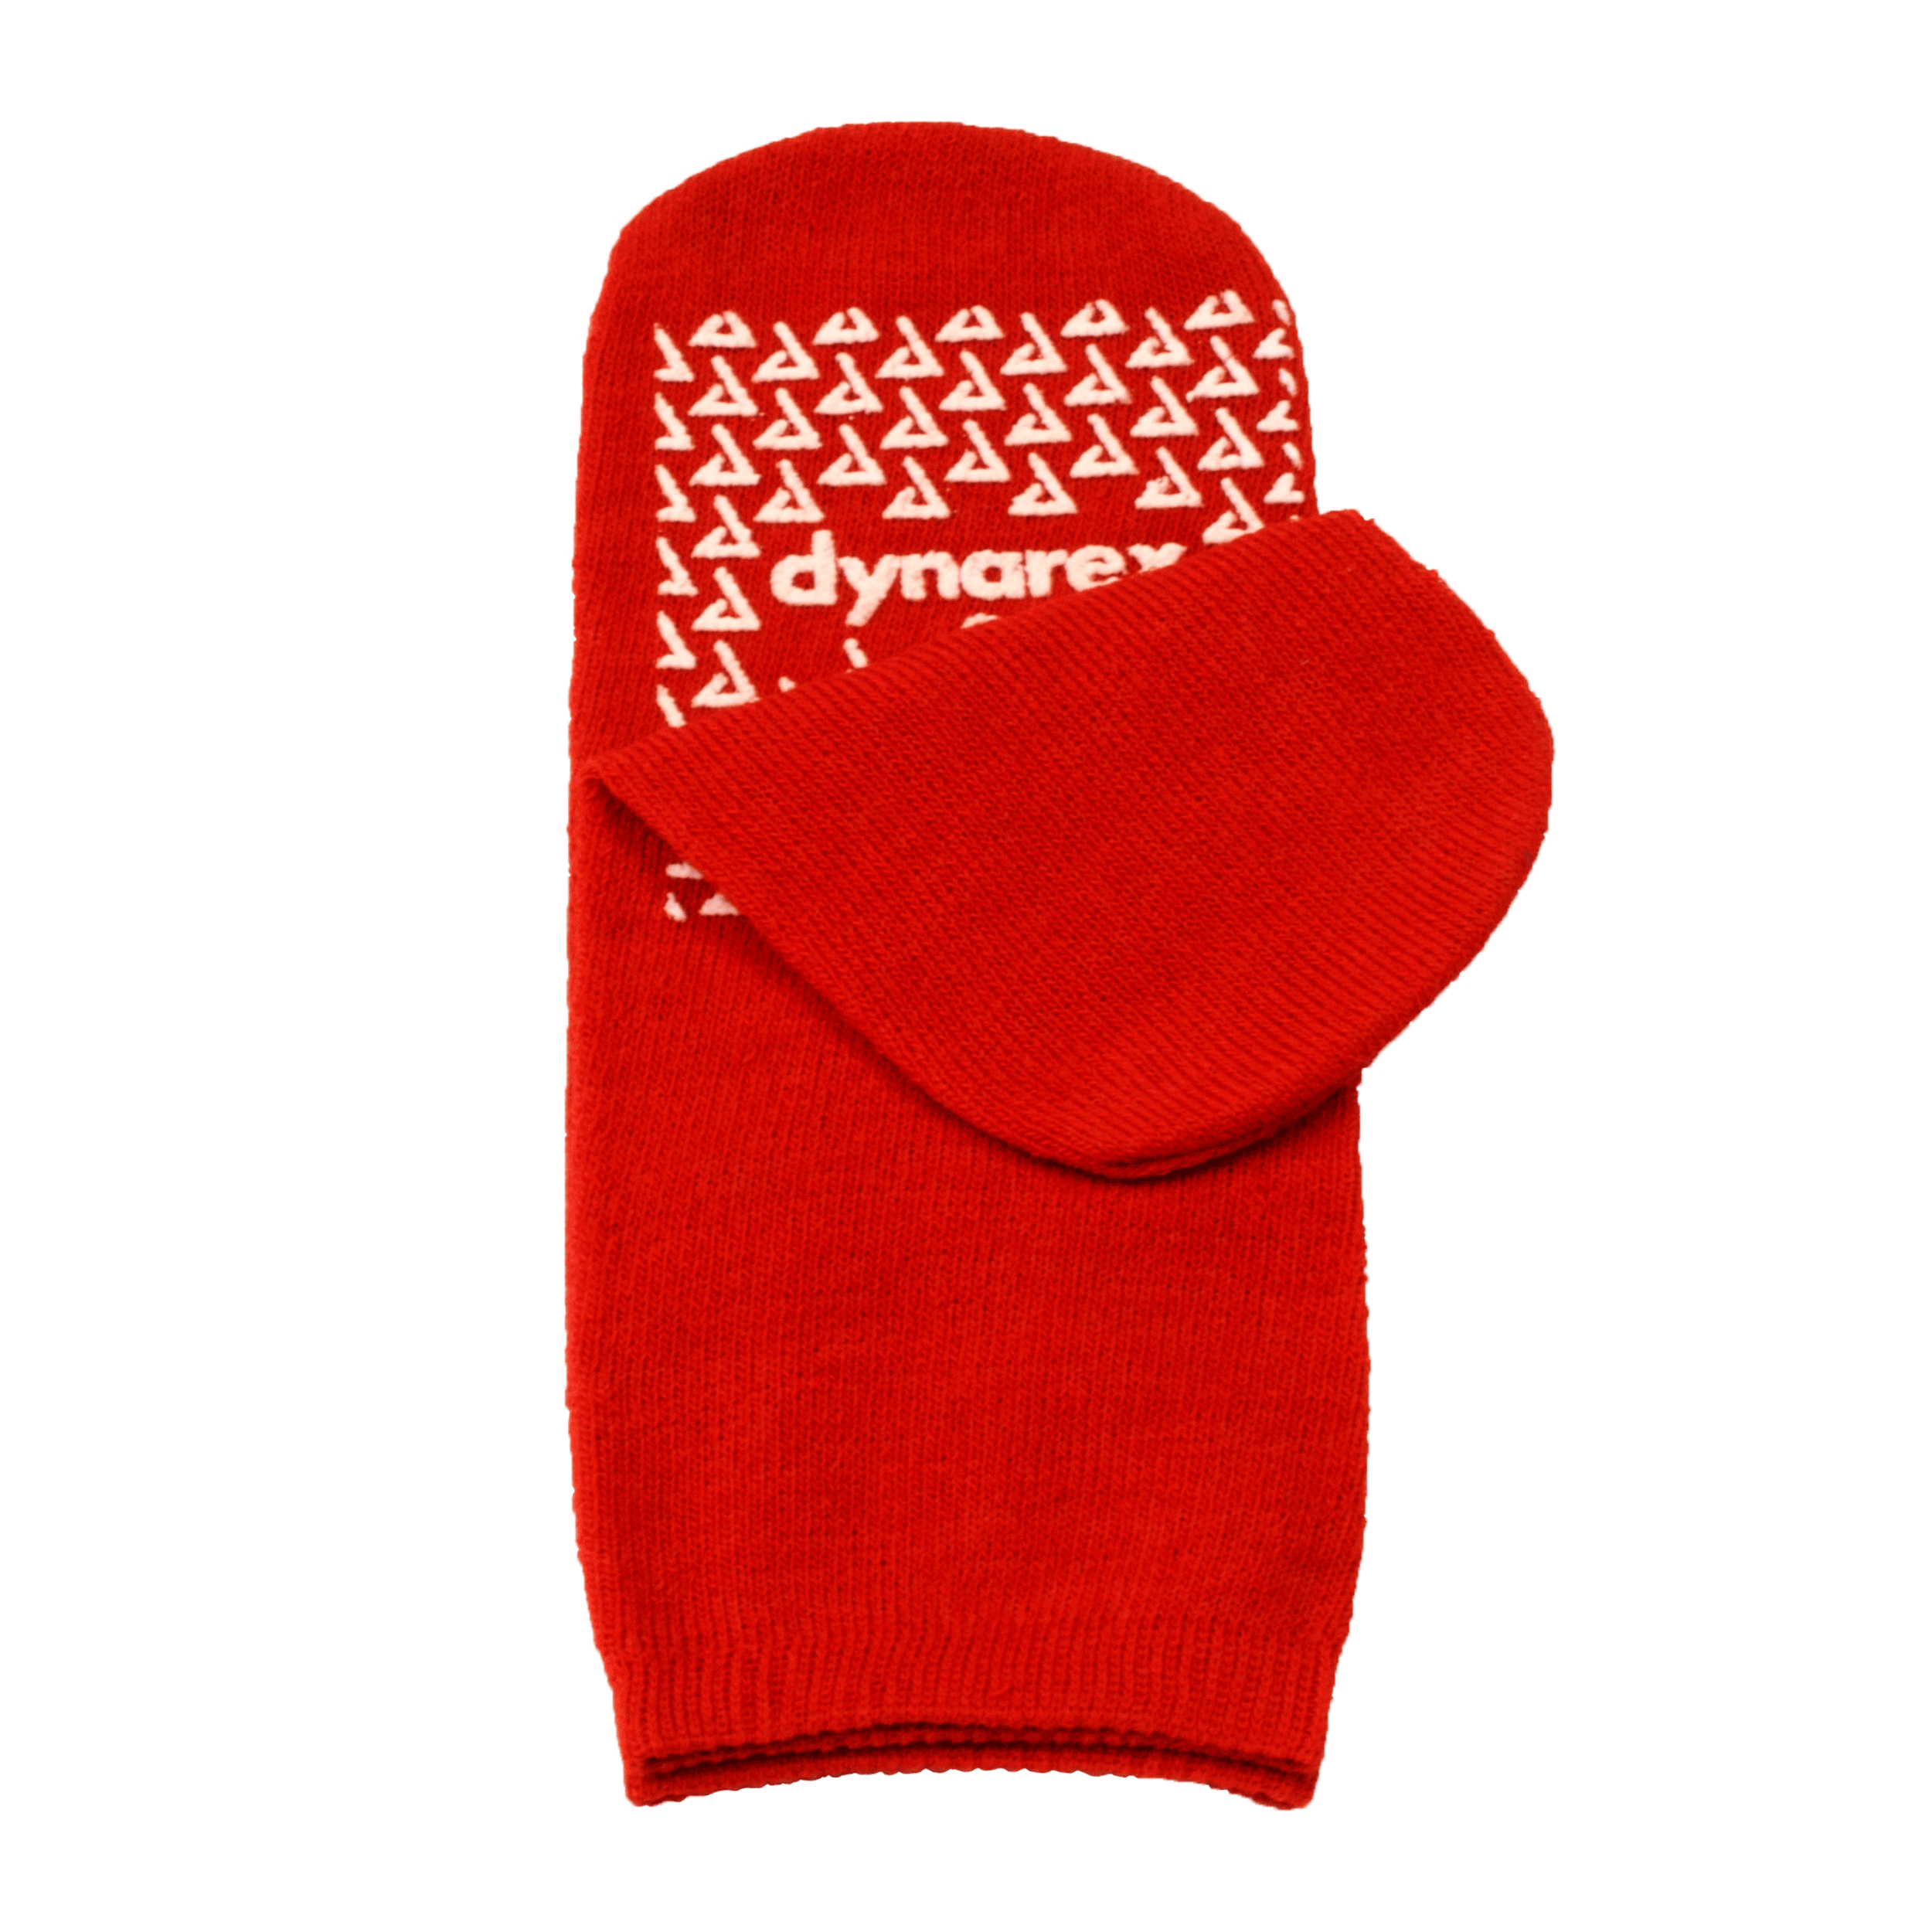 Single-Sided Slipper Socks - Small, Red